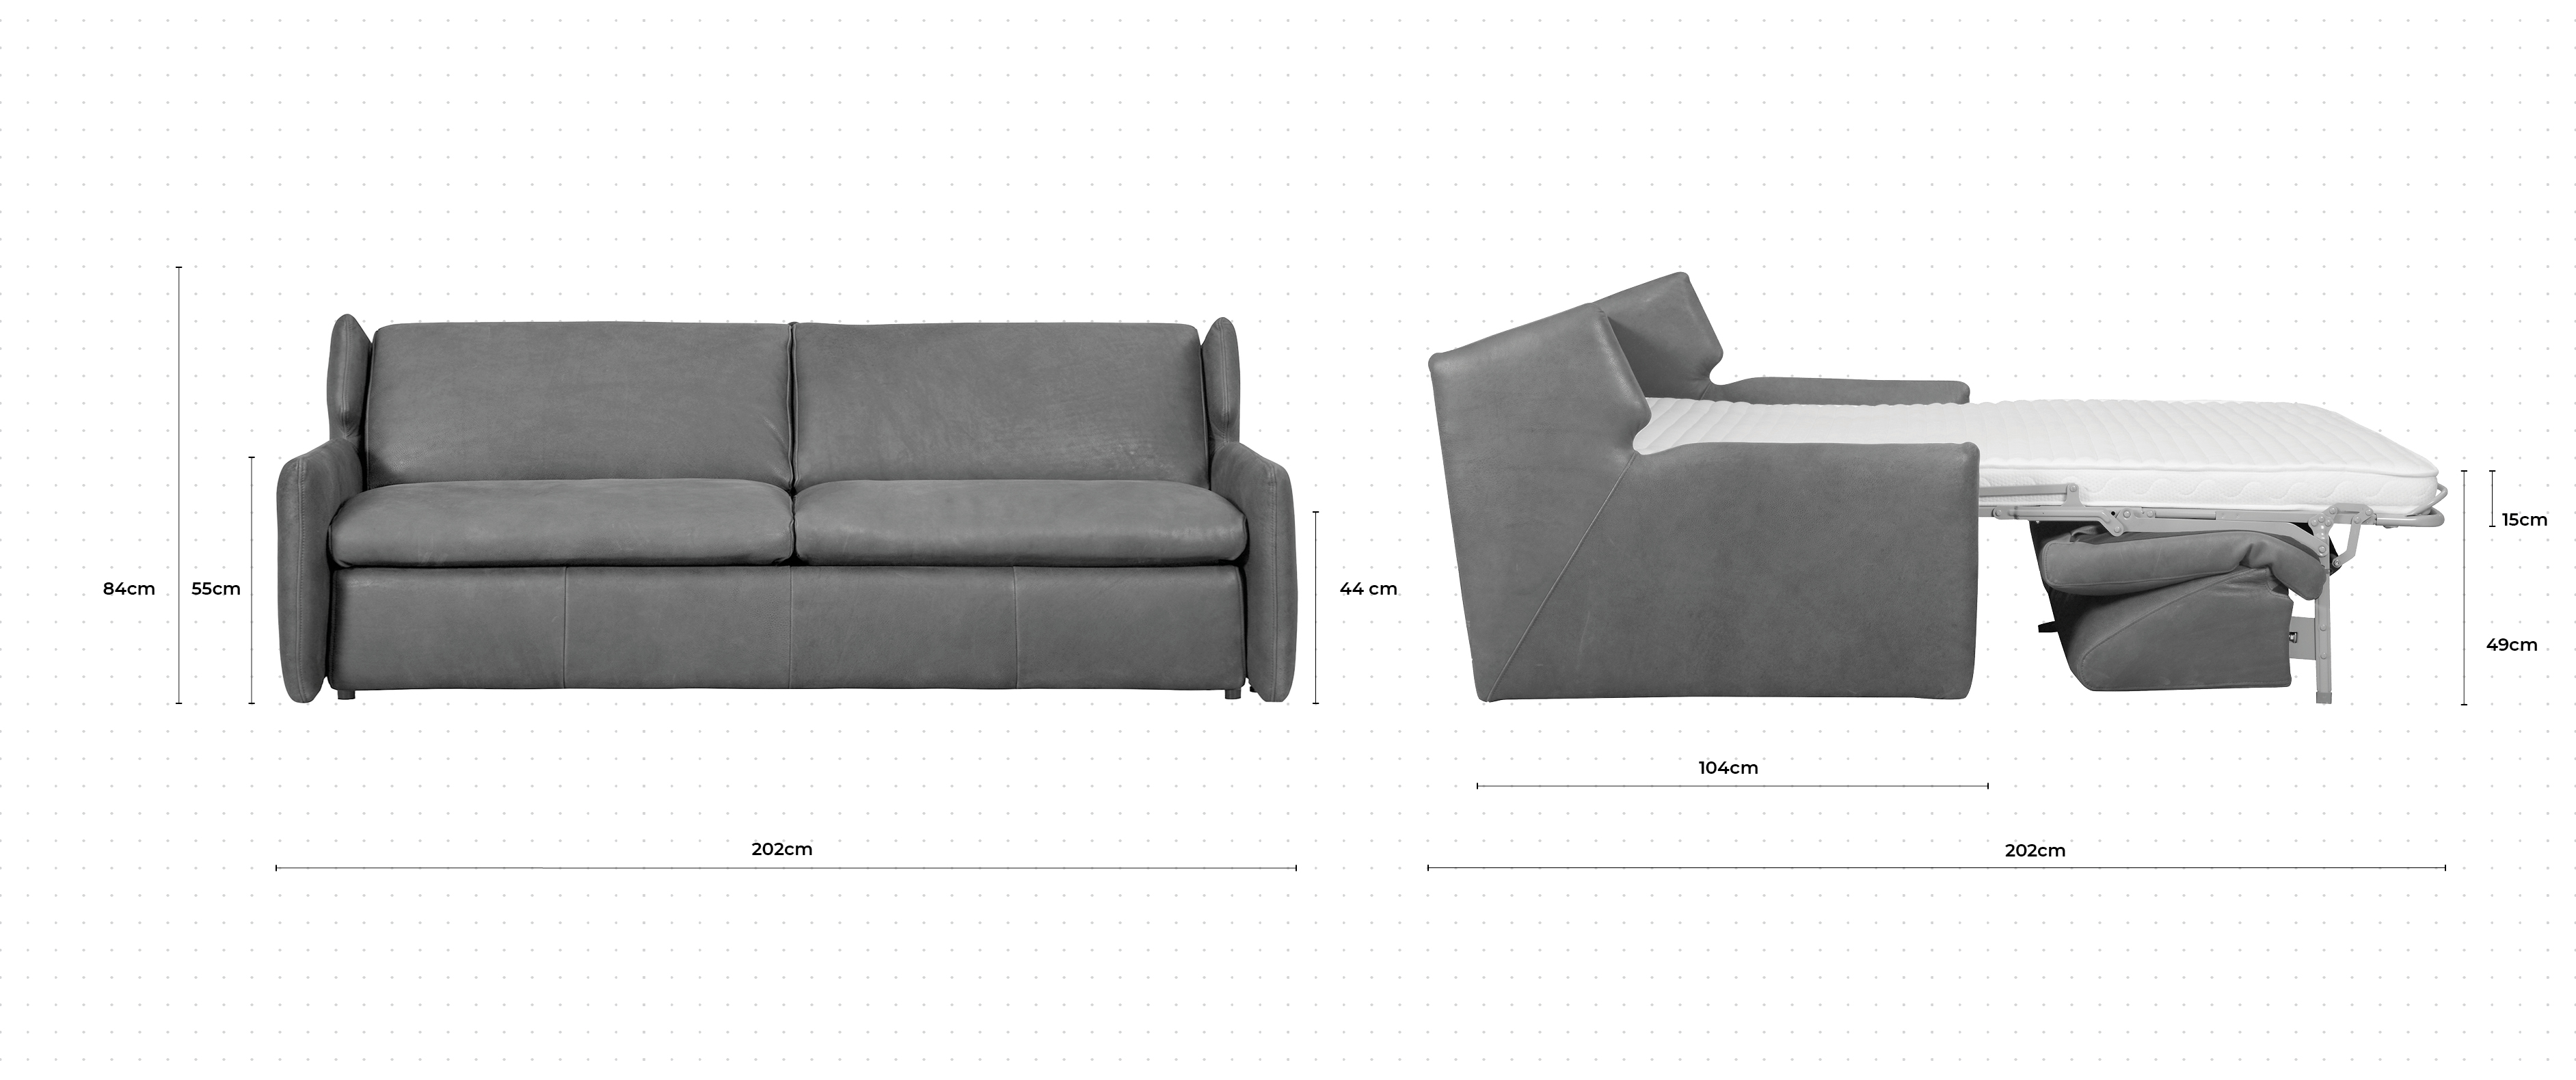 Burton 3 Seater Sofa Bed dimensions